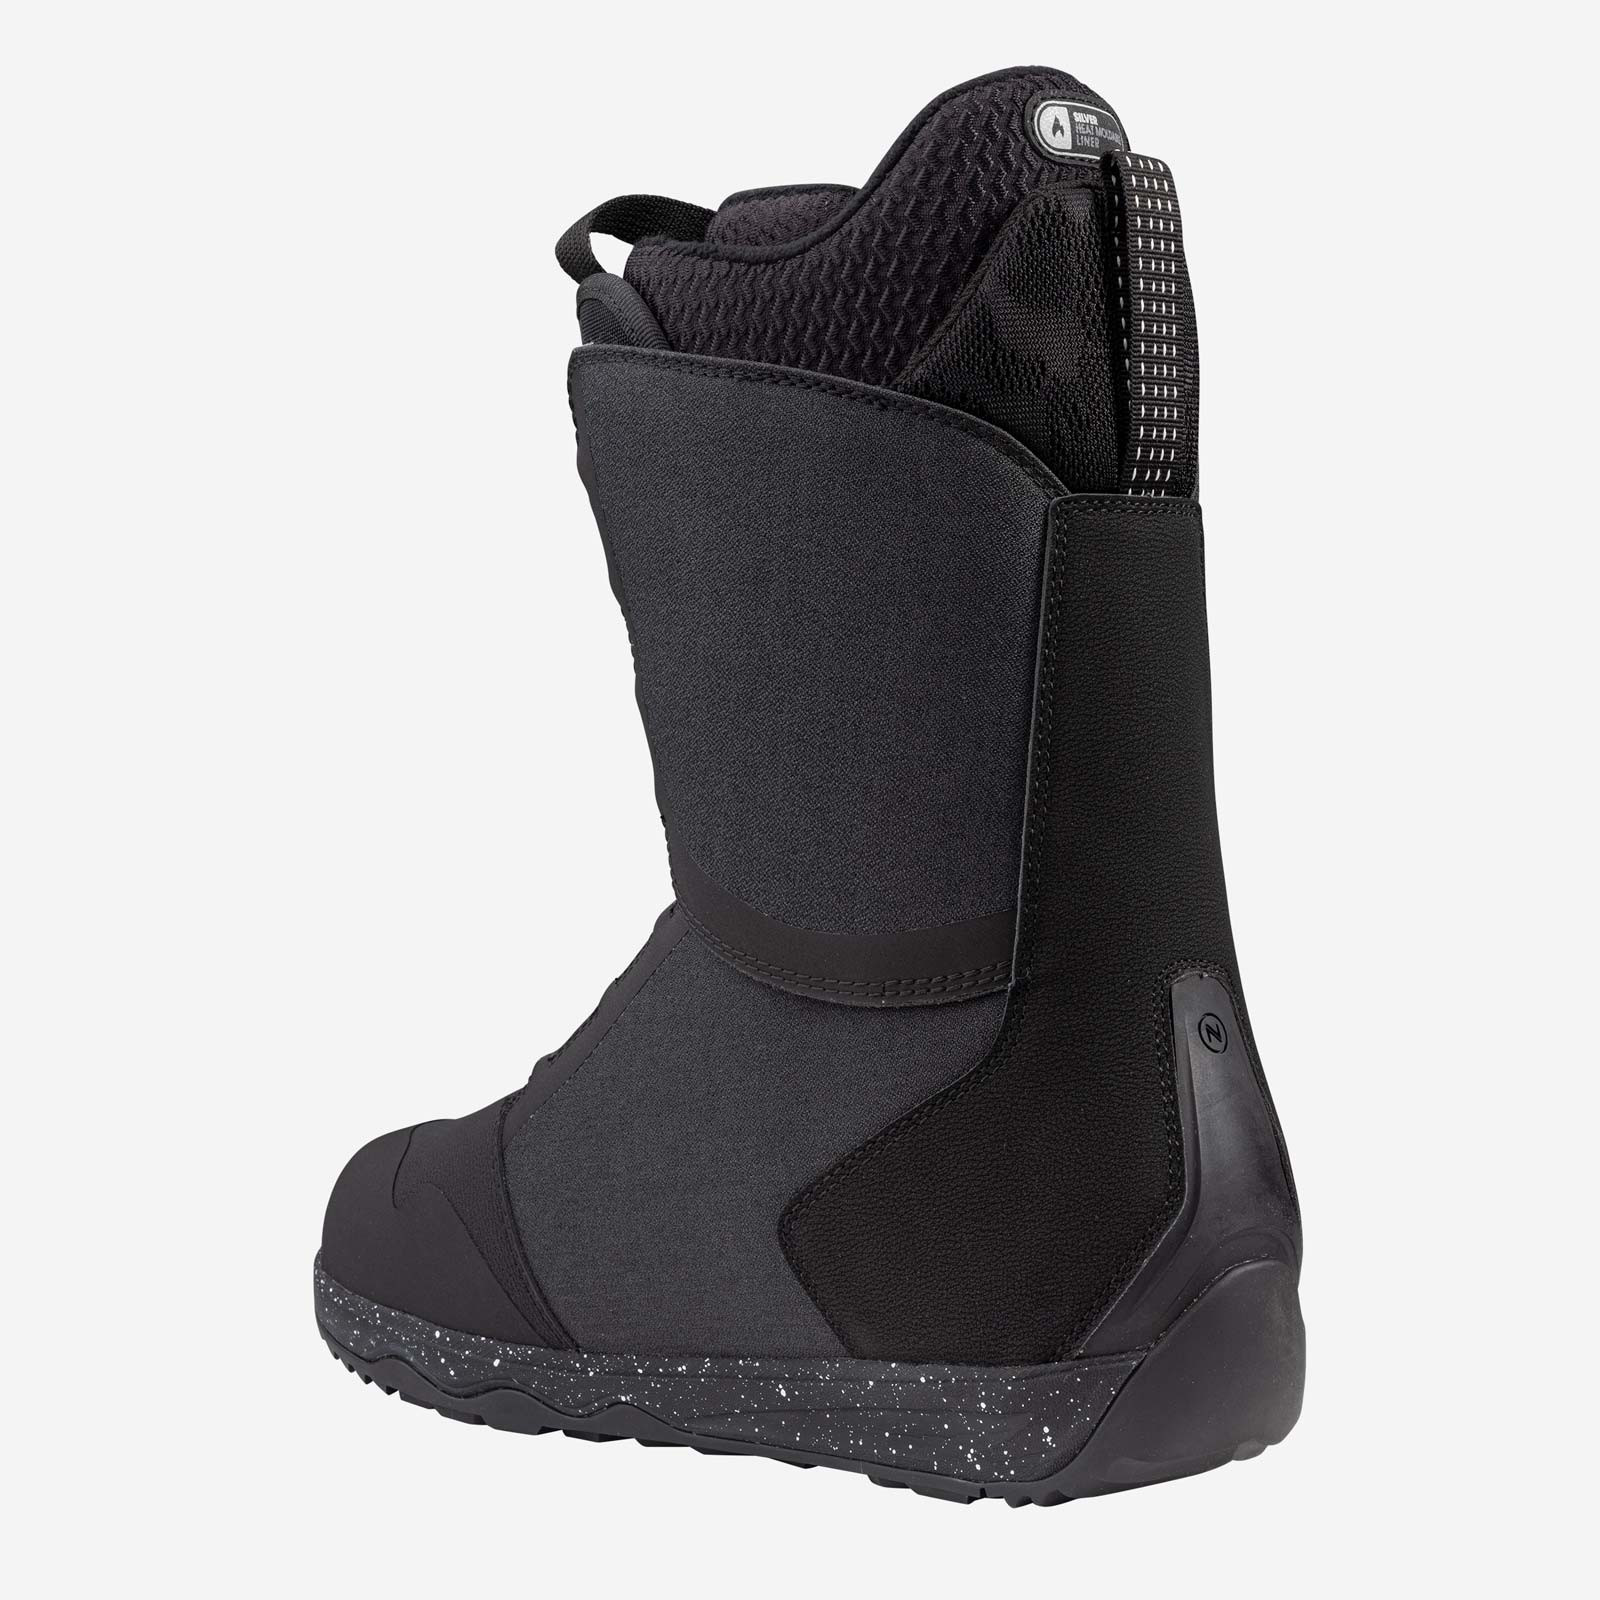 Nidecker Snowboard Boots Kita Black